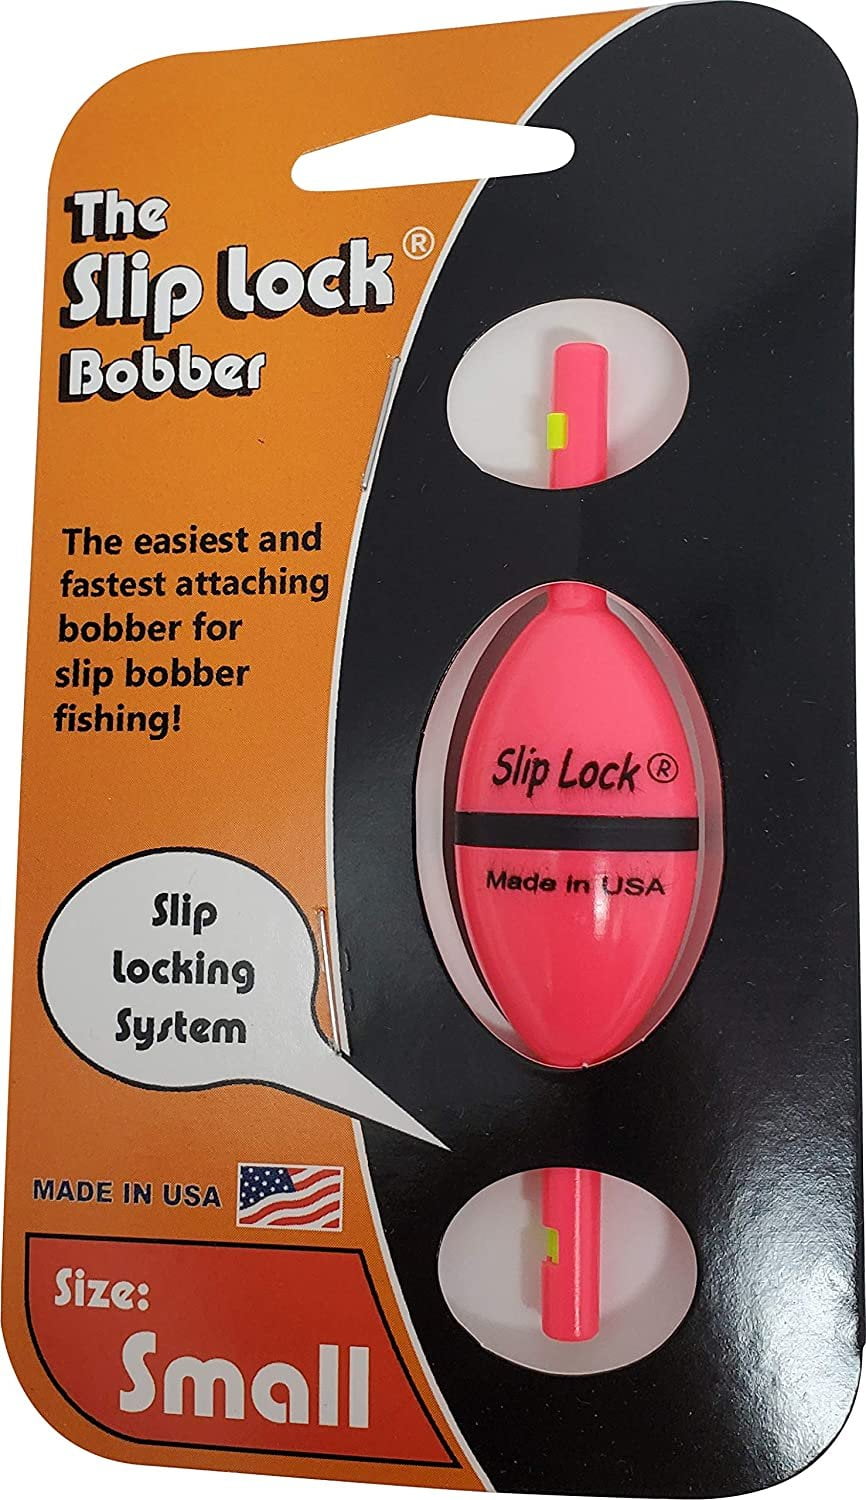 Cool Slip Lock Bobber - A Game-Changer for Bass Fishing